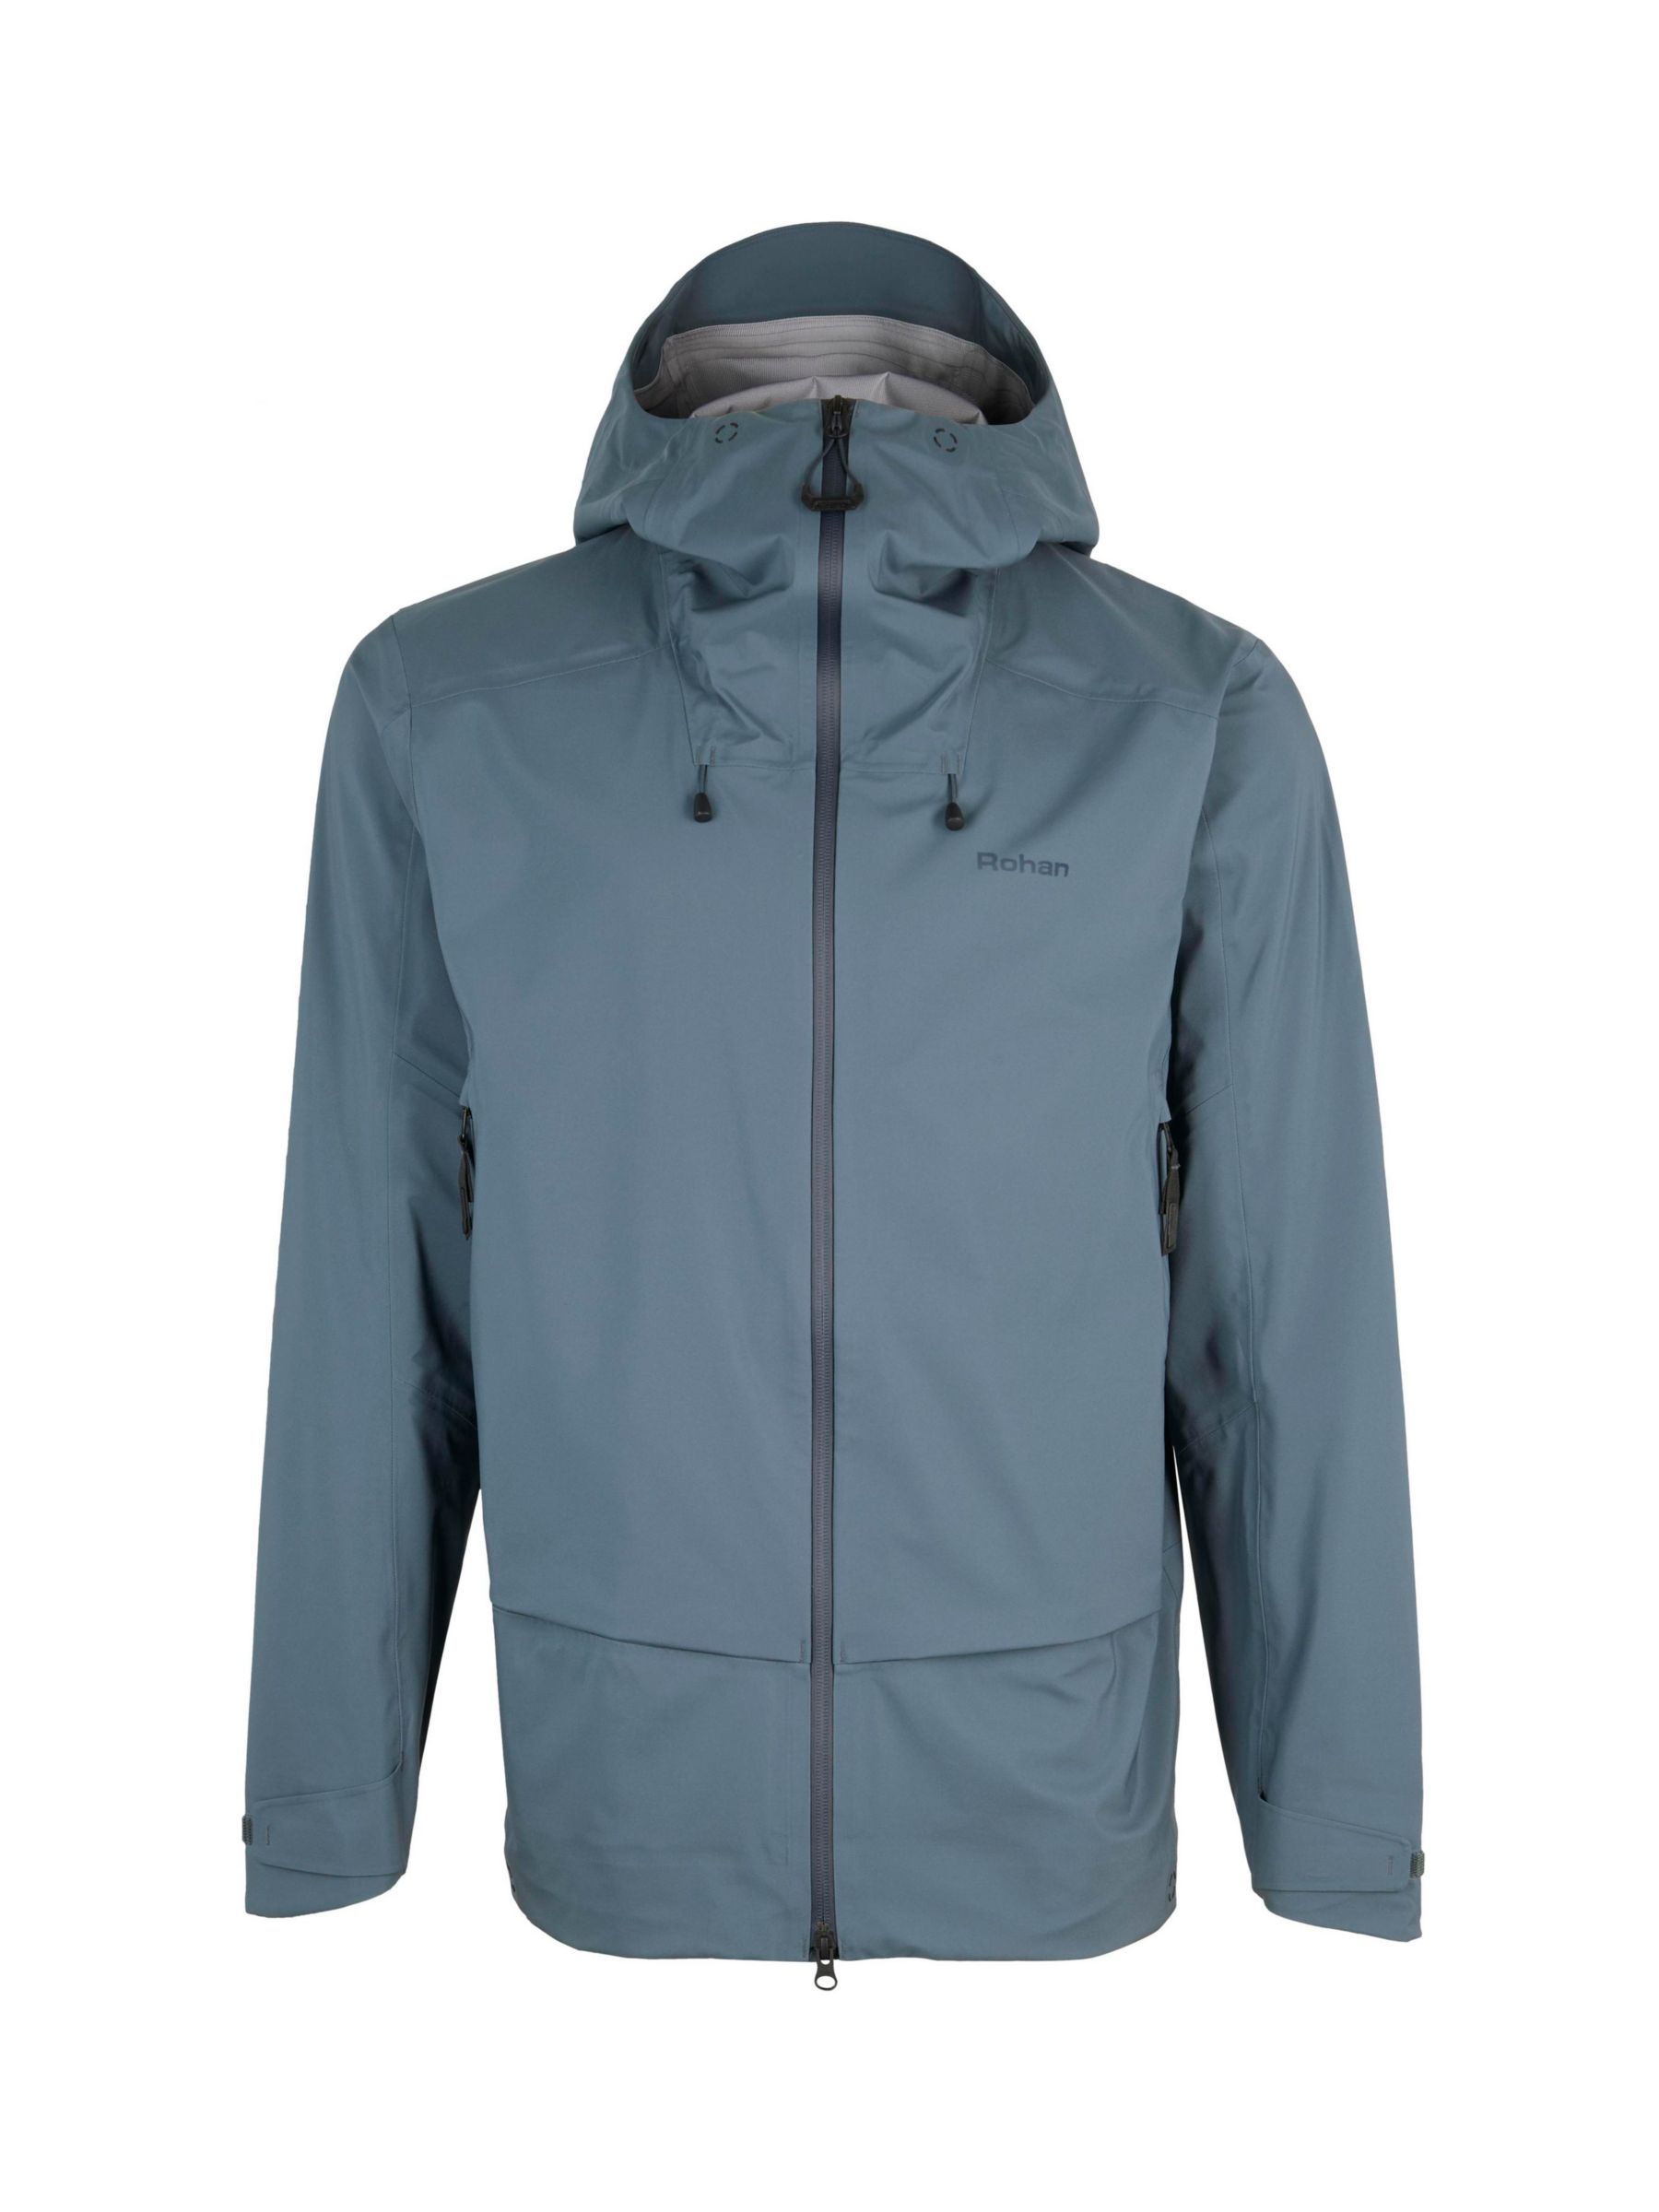 Rohan Ventus Men's Waterproof Jacket, Slate Grey at John Lewis & Partners